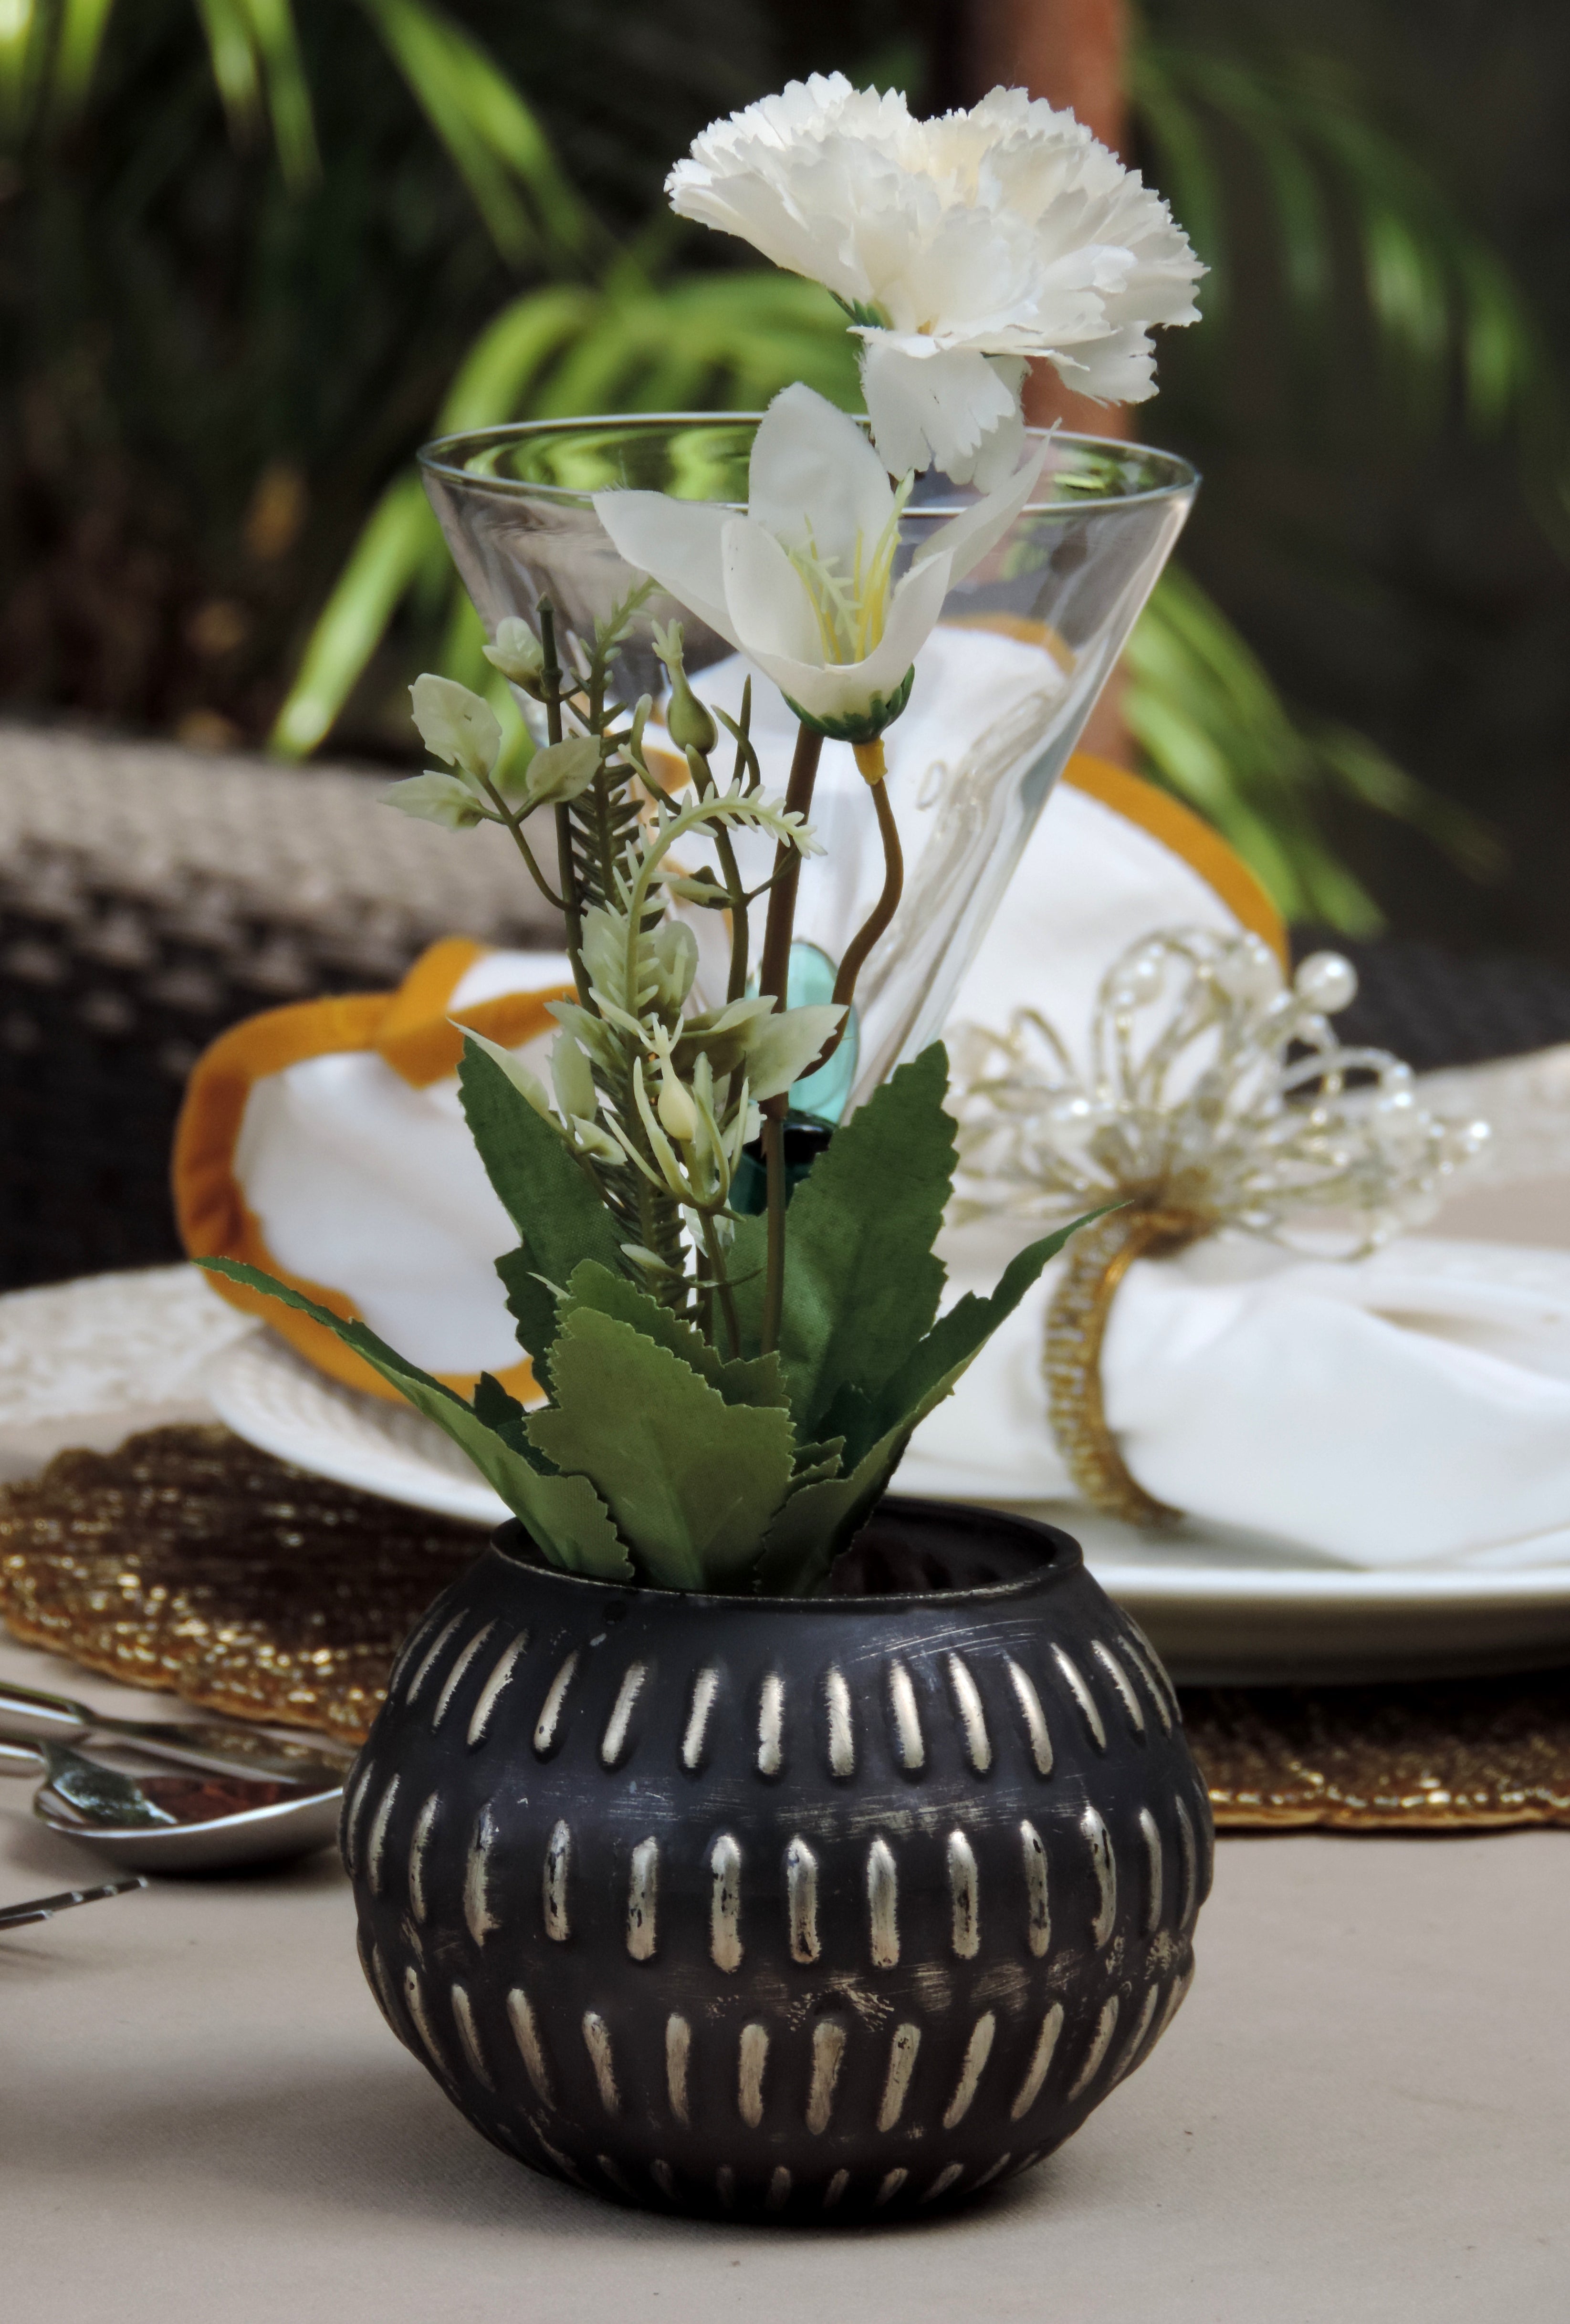 Bud Vase / Glass Vase for Wedding, Events Decorating, Arrangements, Flowers, Office or Home Decor / 4"x3.4"